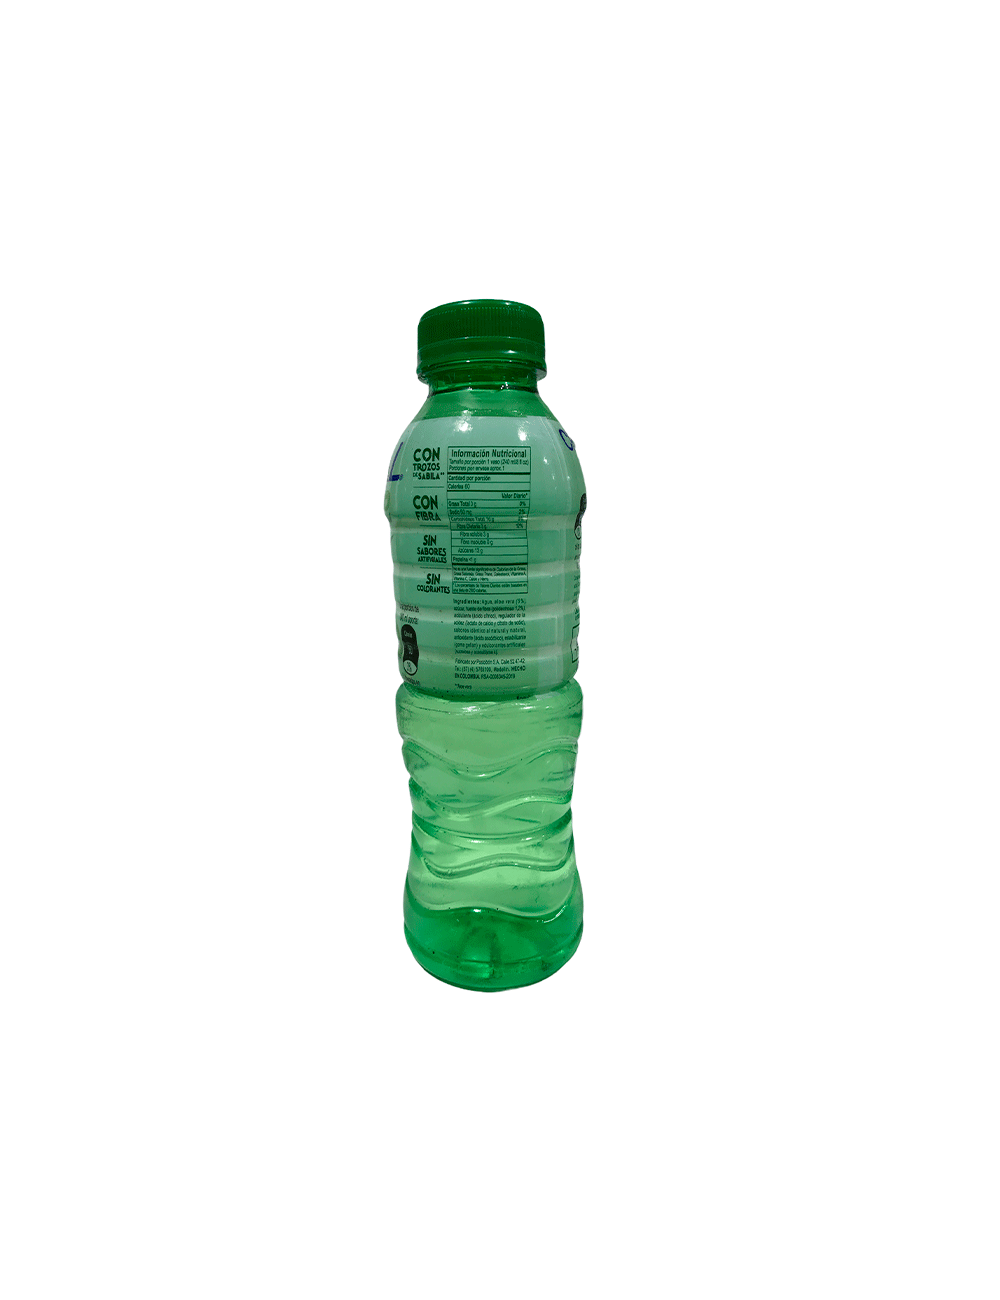 Agua Cristal con aloe botella 330ml - Postobón